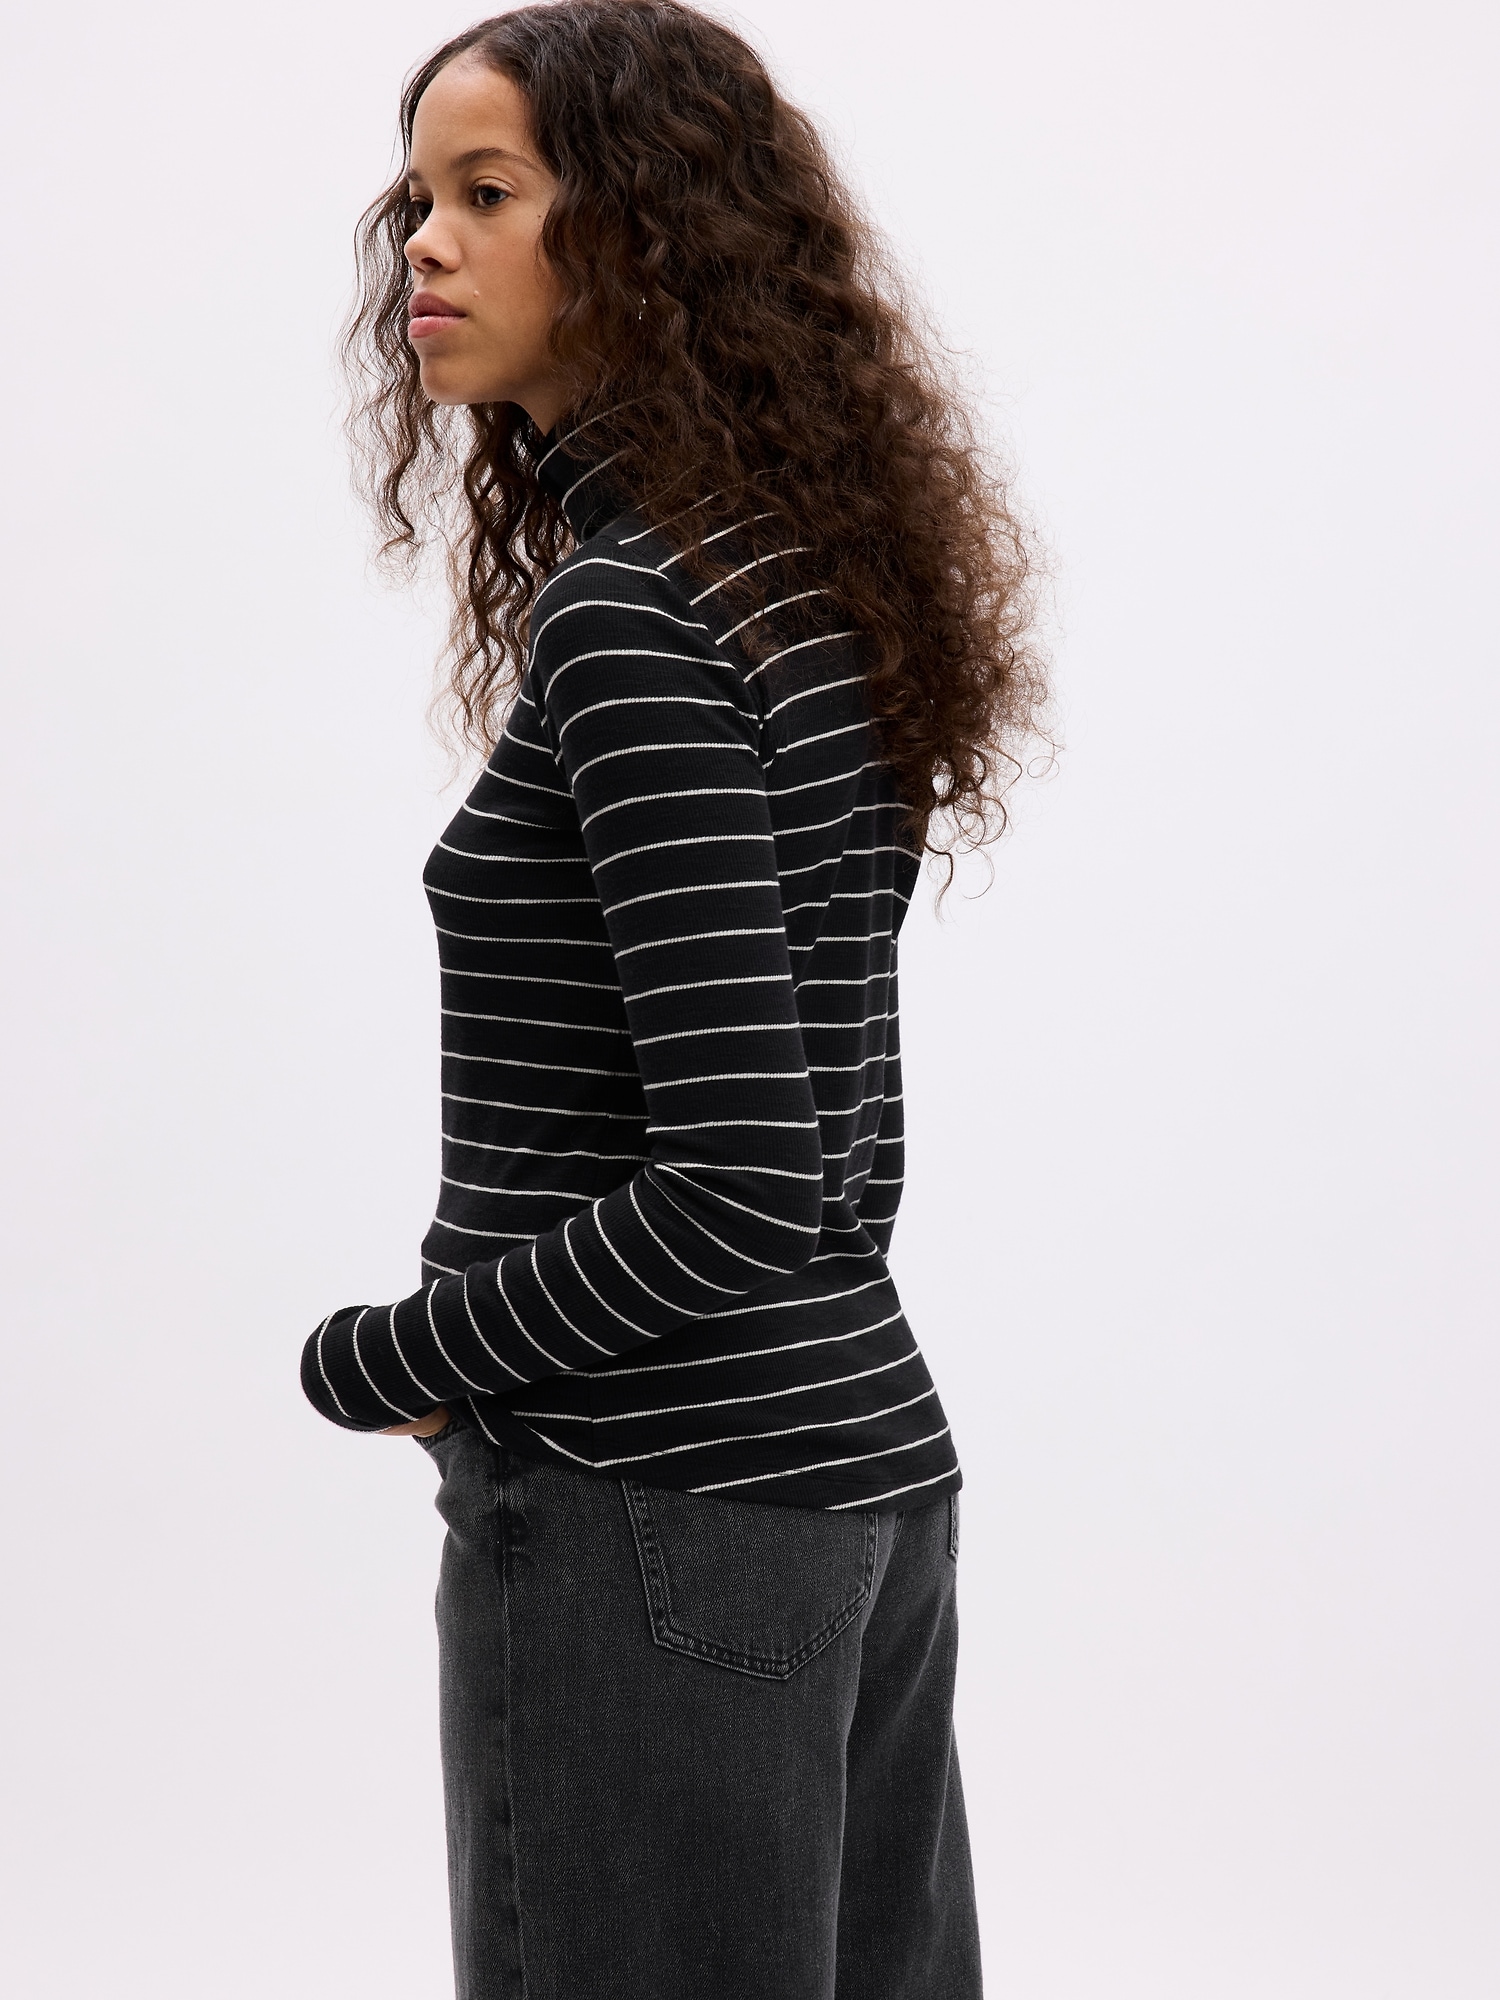 Women's Turtule Neck Long Sleeve Top Basic Classic Layering Shirt